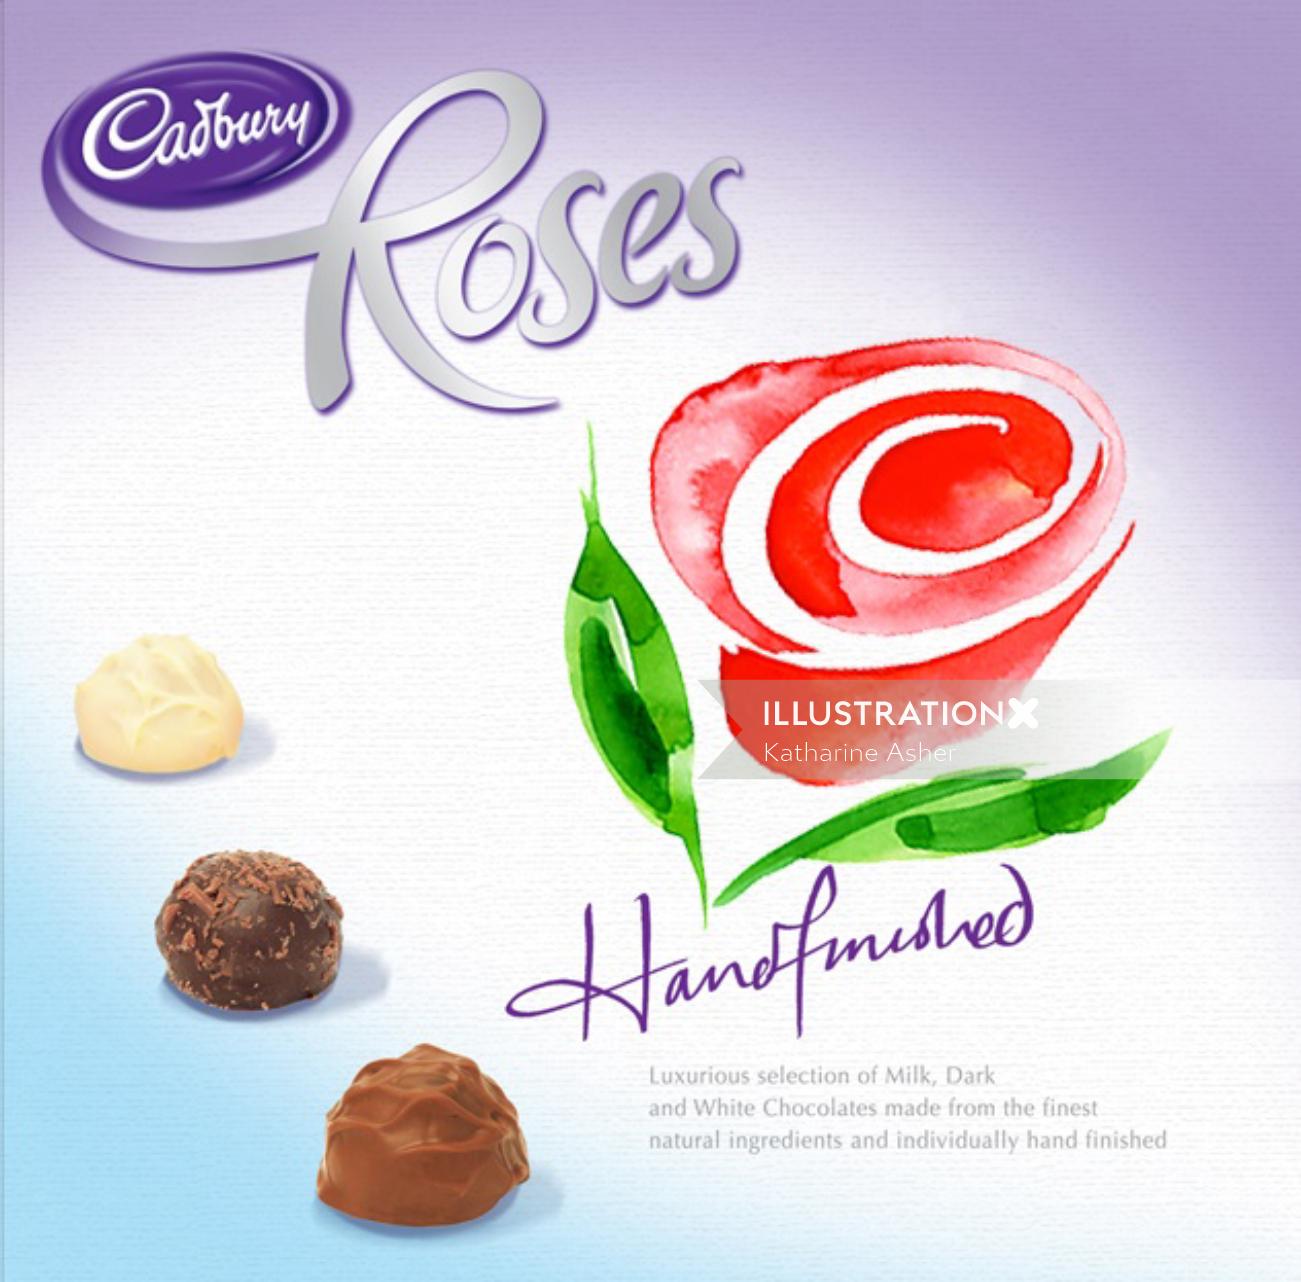 Illustration de chocolats Cadburys roses par Katharine Asher